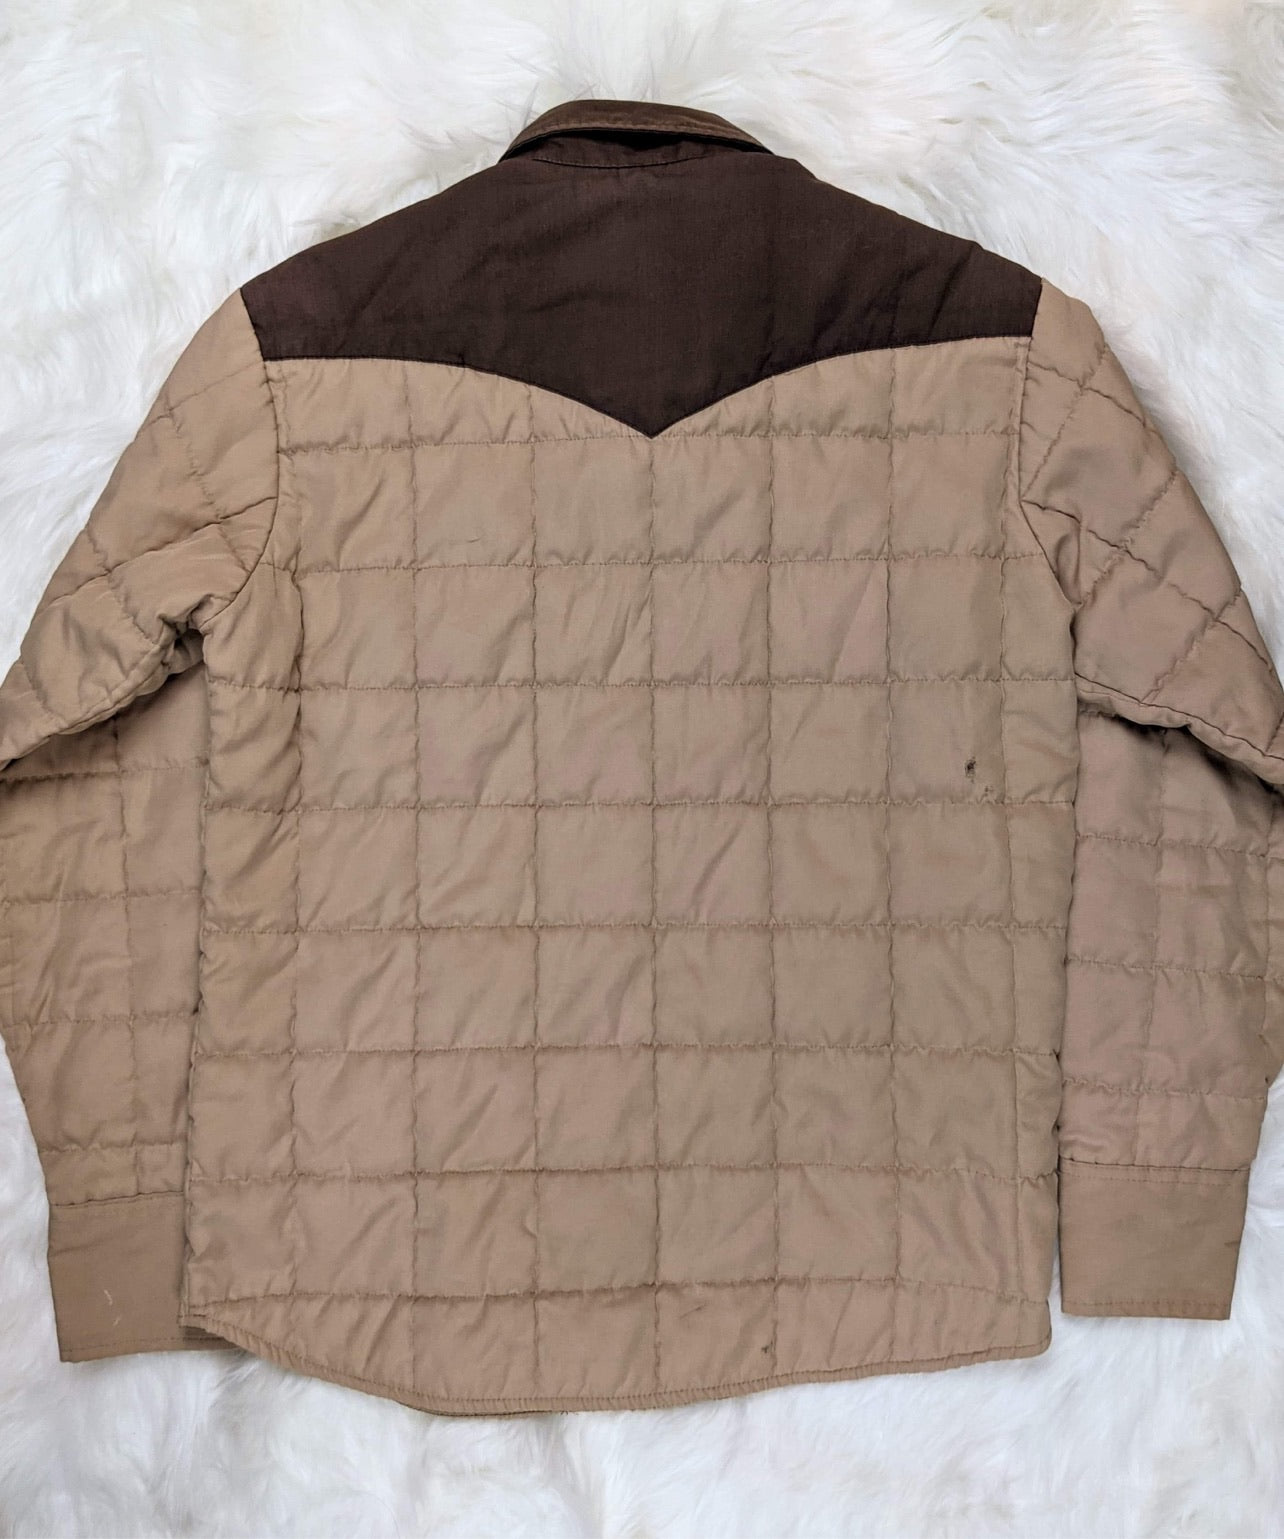 western shirt jacket overshirt quilted beige brown mens bulls 70s style vintage retro